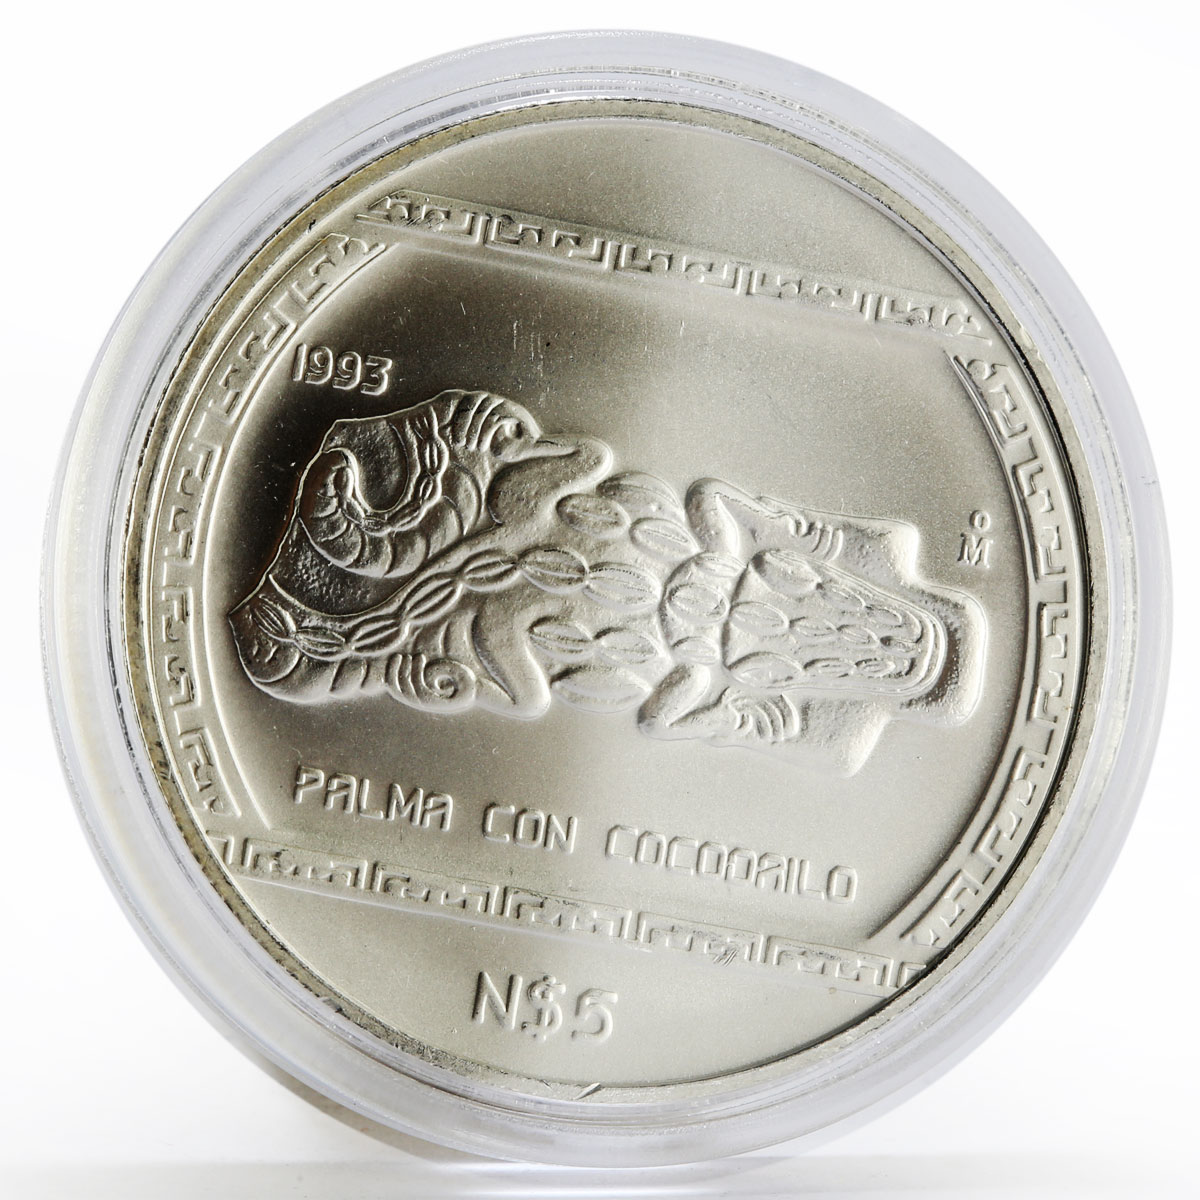 Mexico 5 pesos Palma Con Cocodrilo silver coin 1993